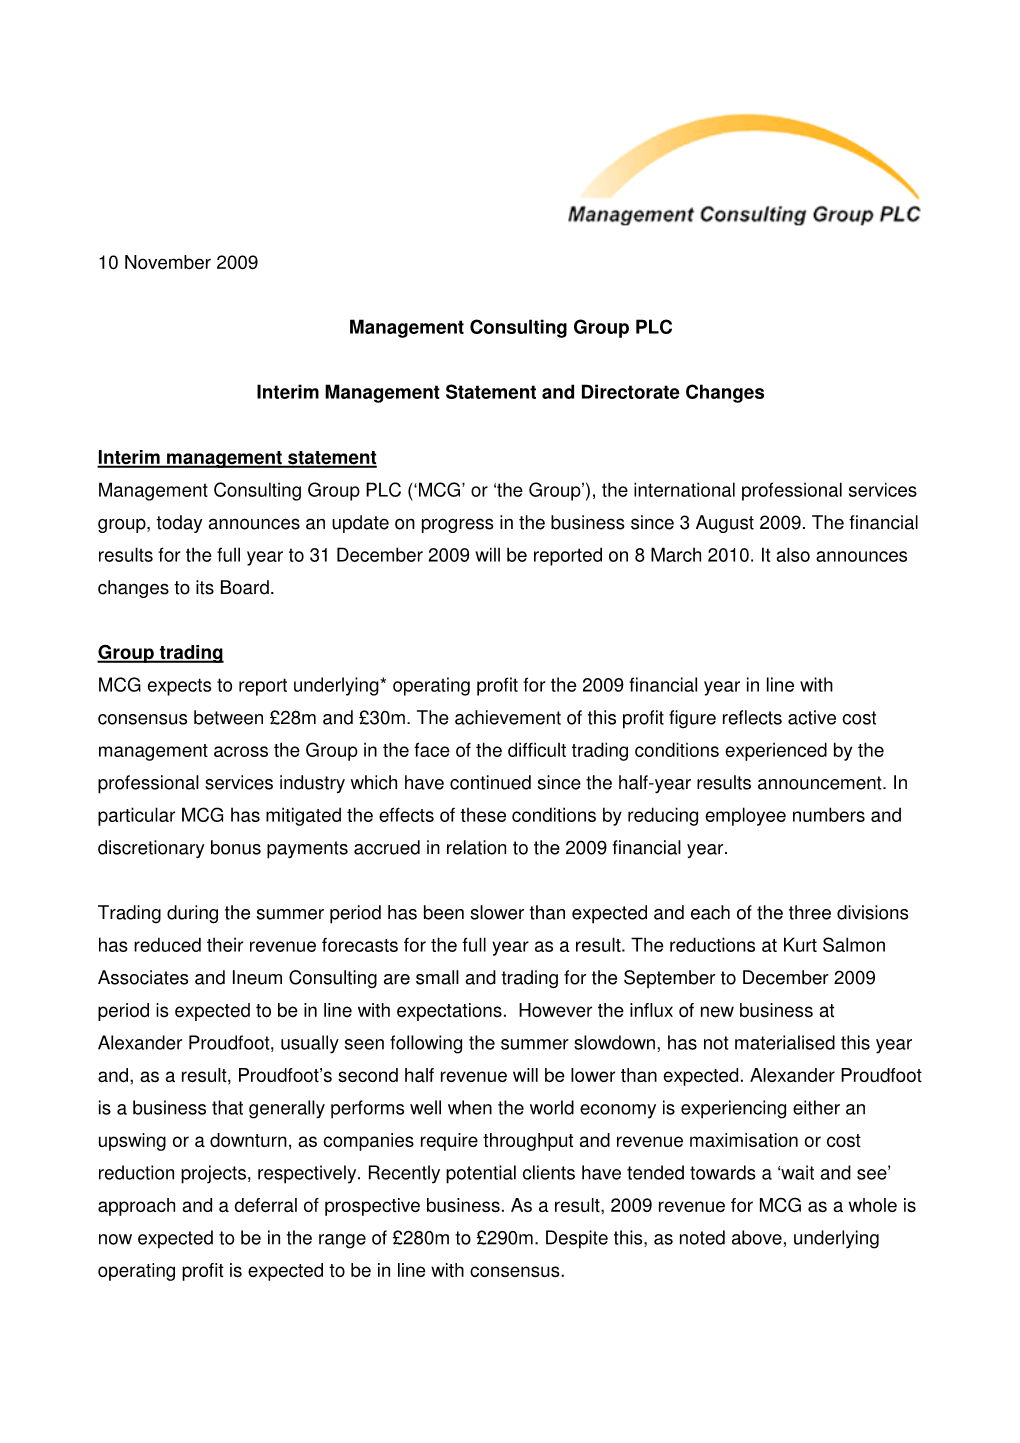 Interim Management Statement and Directorate Changes